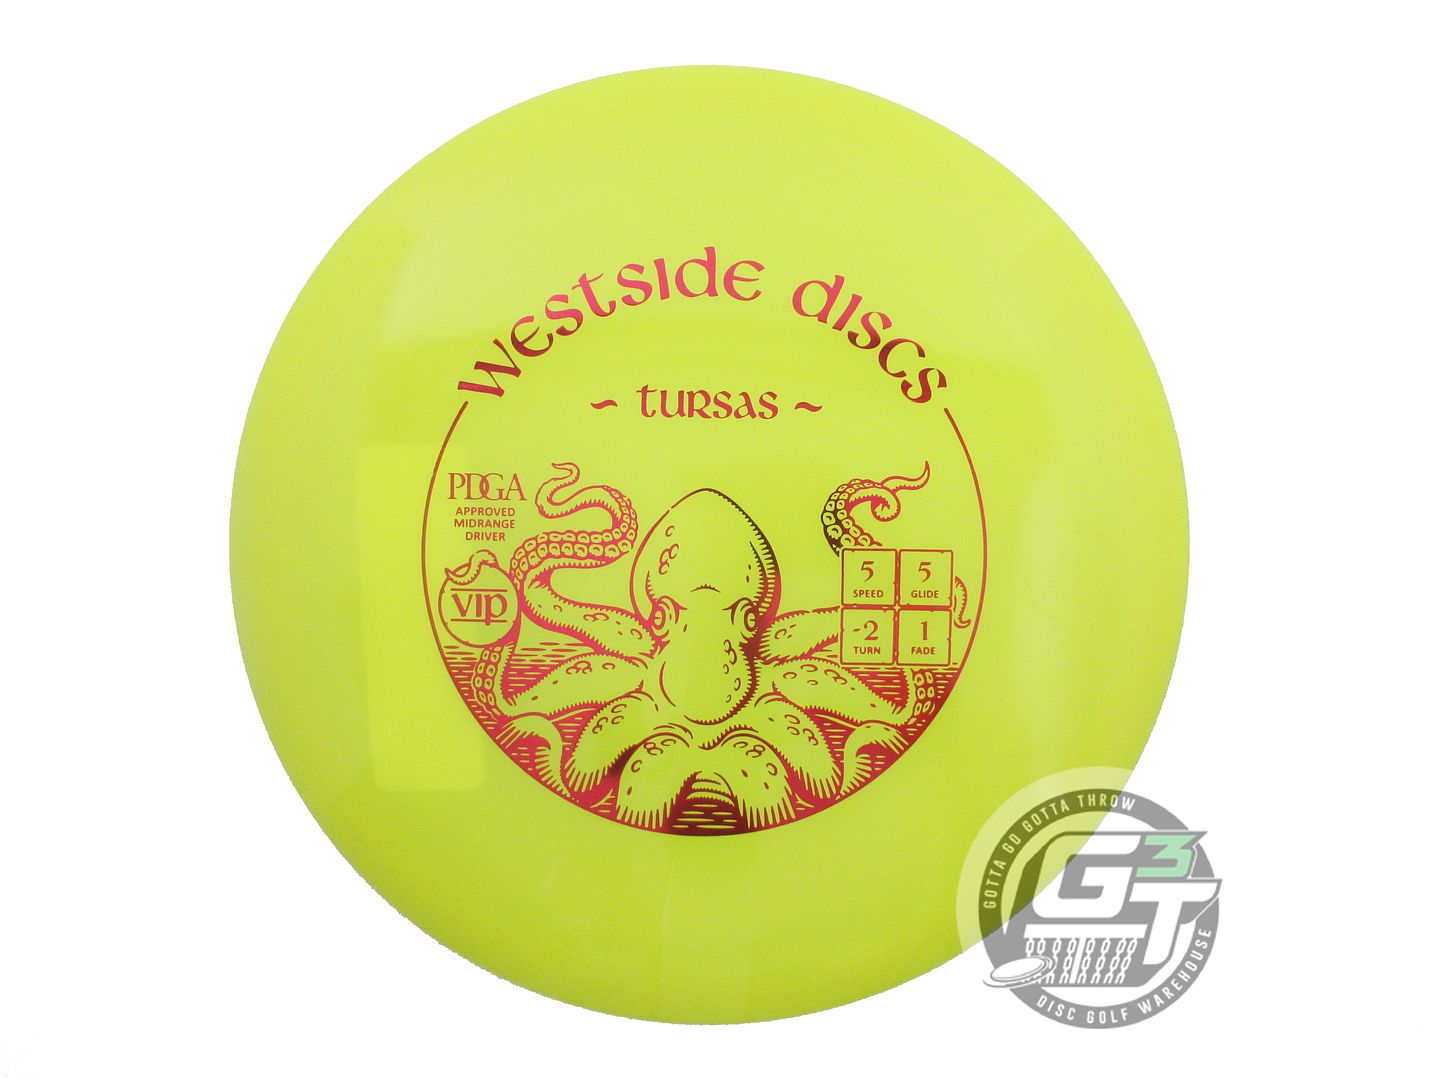 Westside VIP Tursas Midrange Golf Disc (Individually Listed)